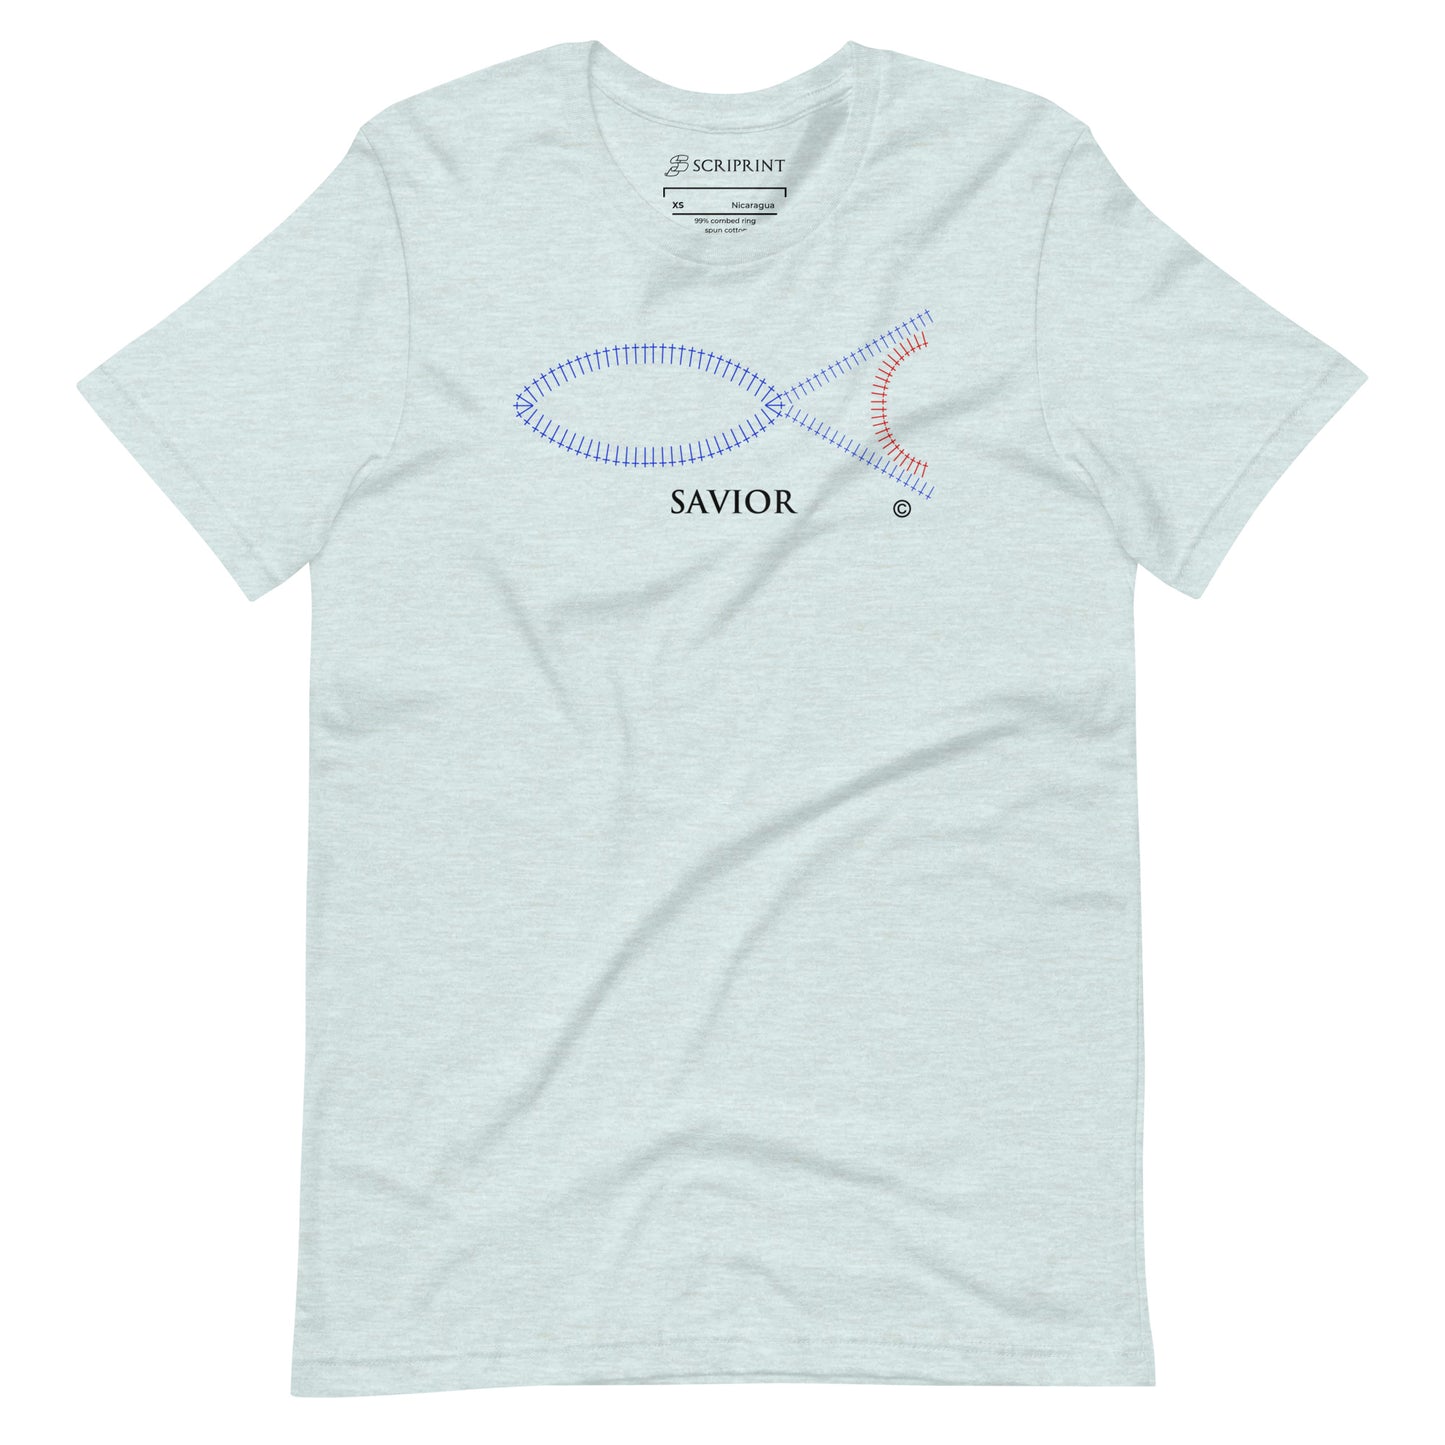 Savior Women's T-shirt